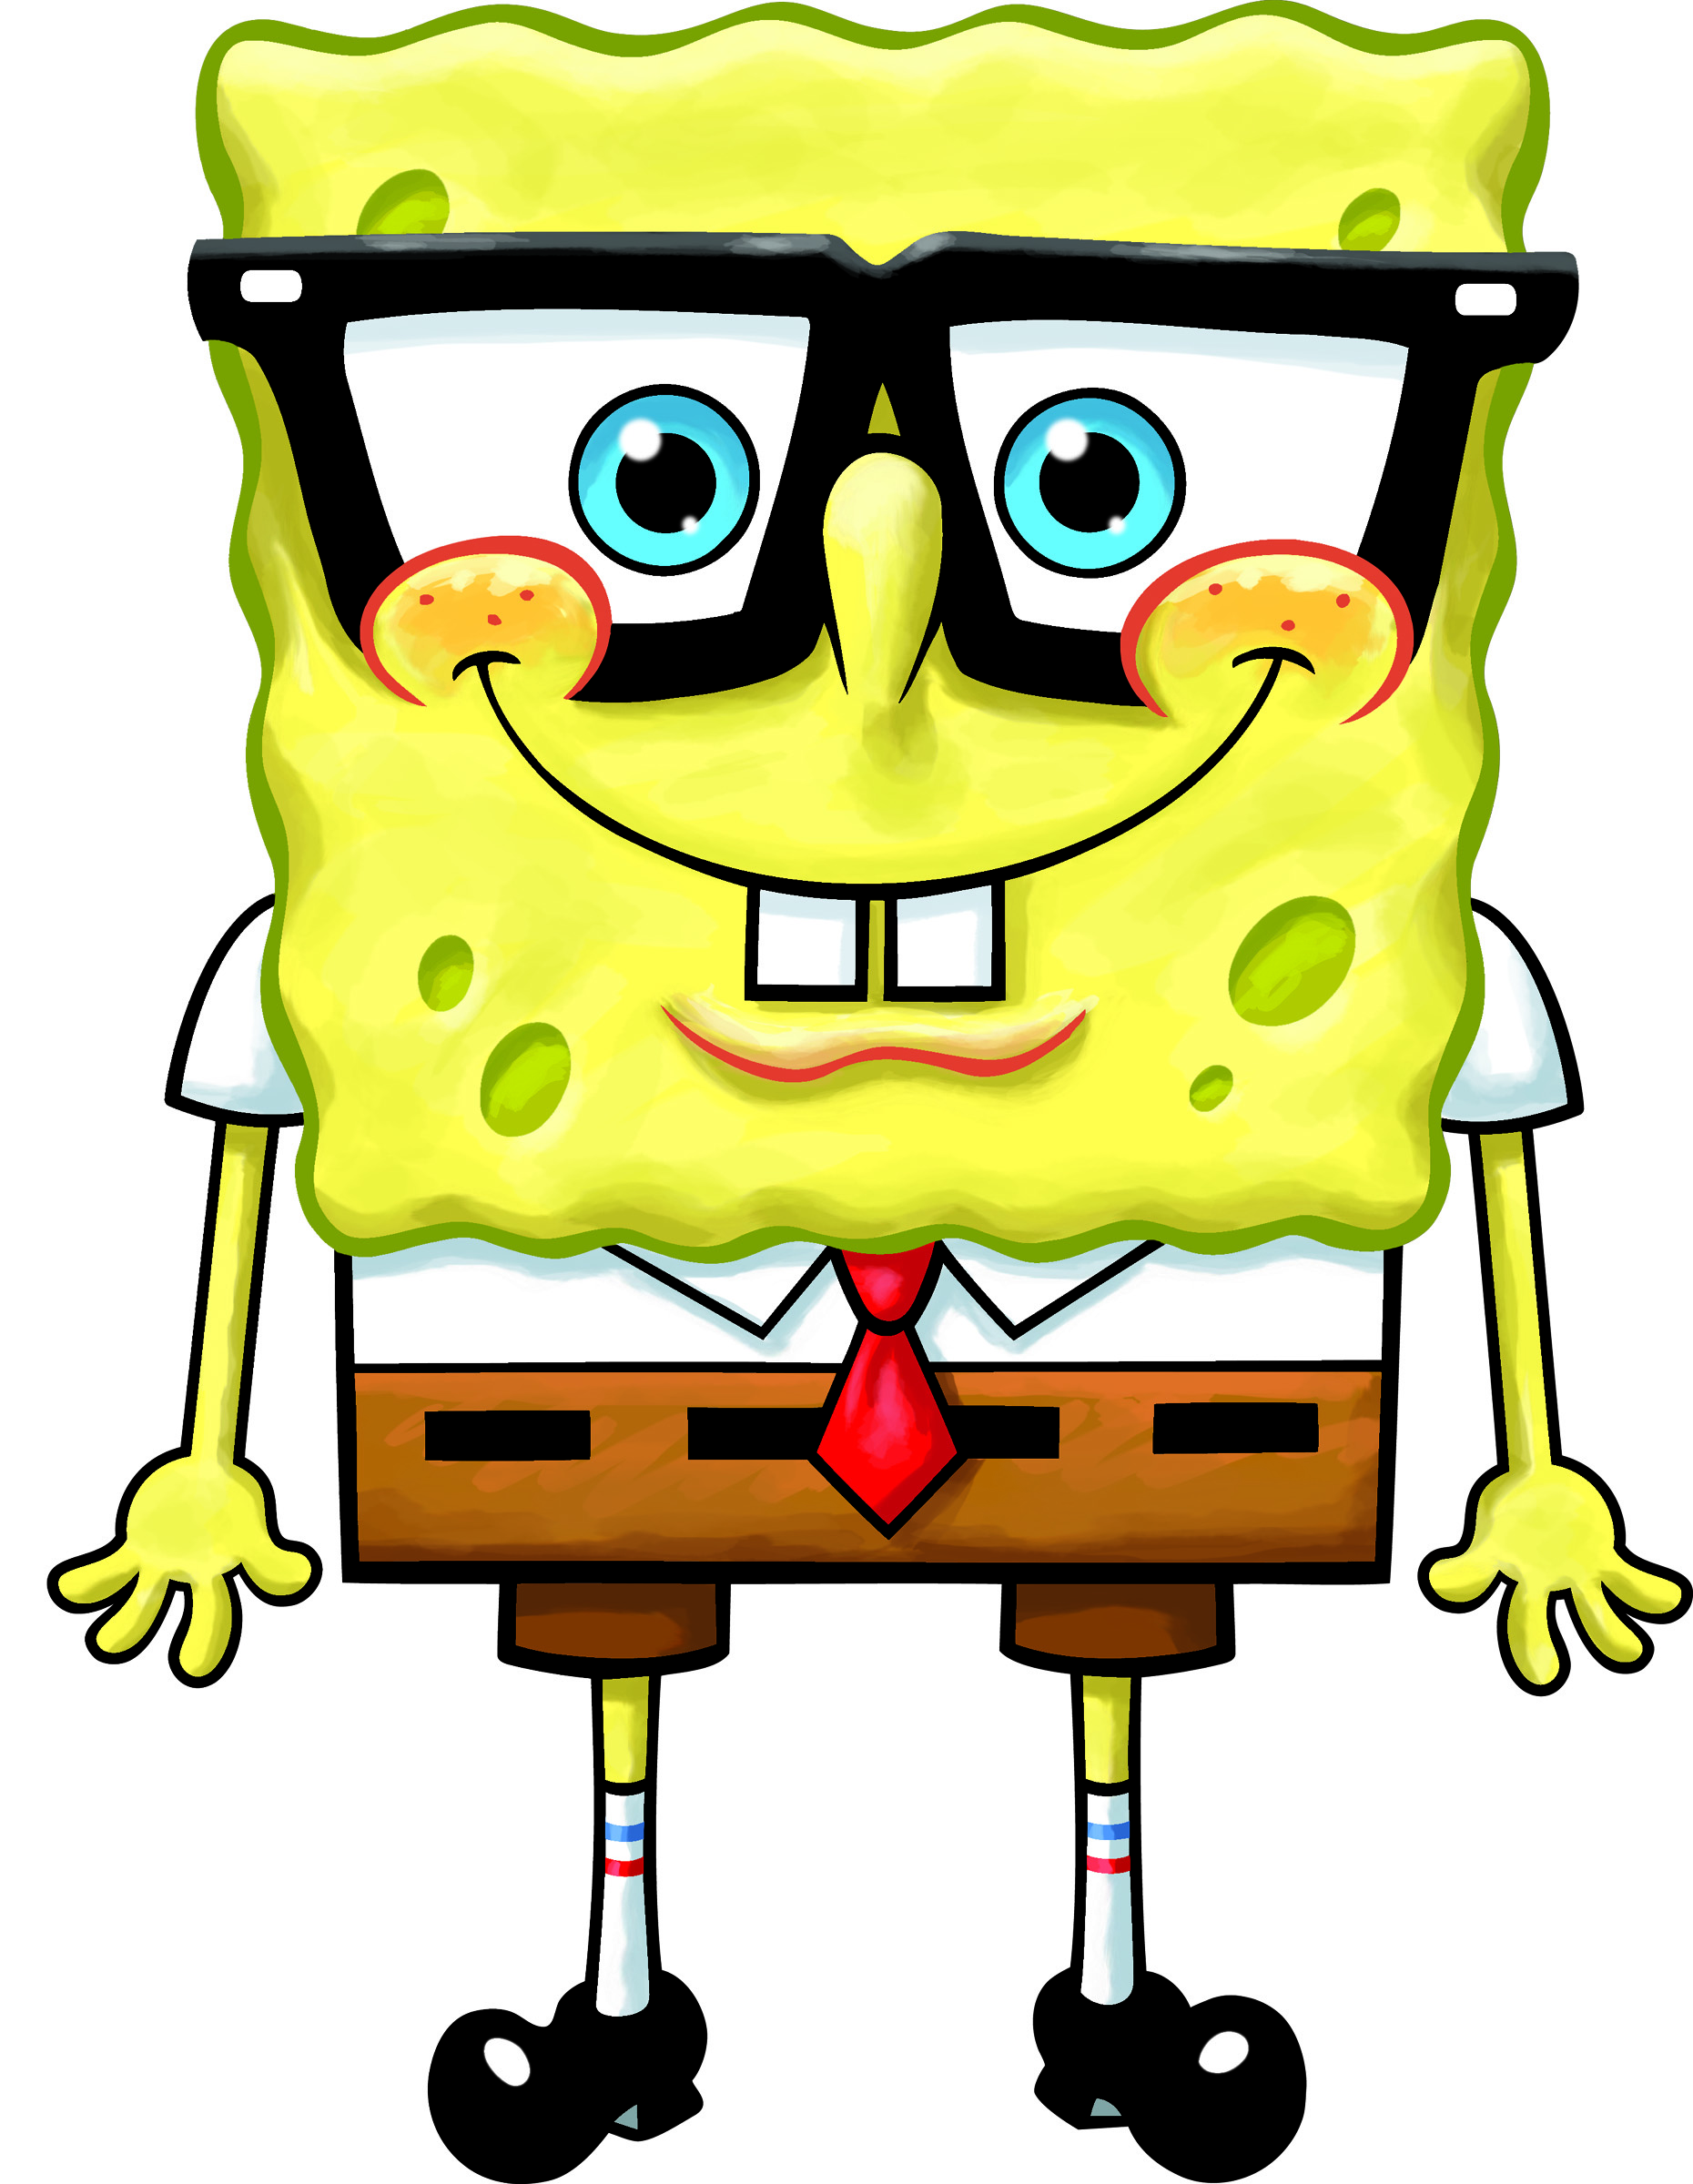 Pics Of Spongebob Squarepants Characters